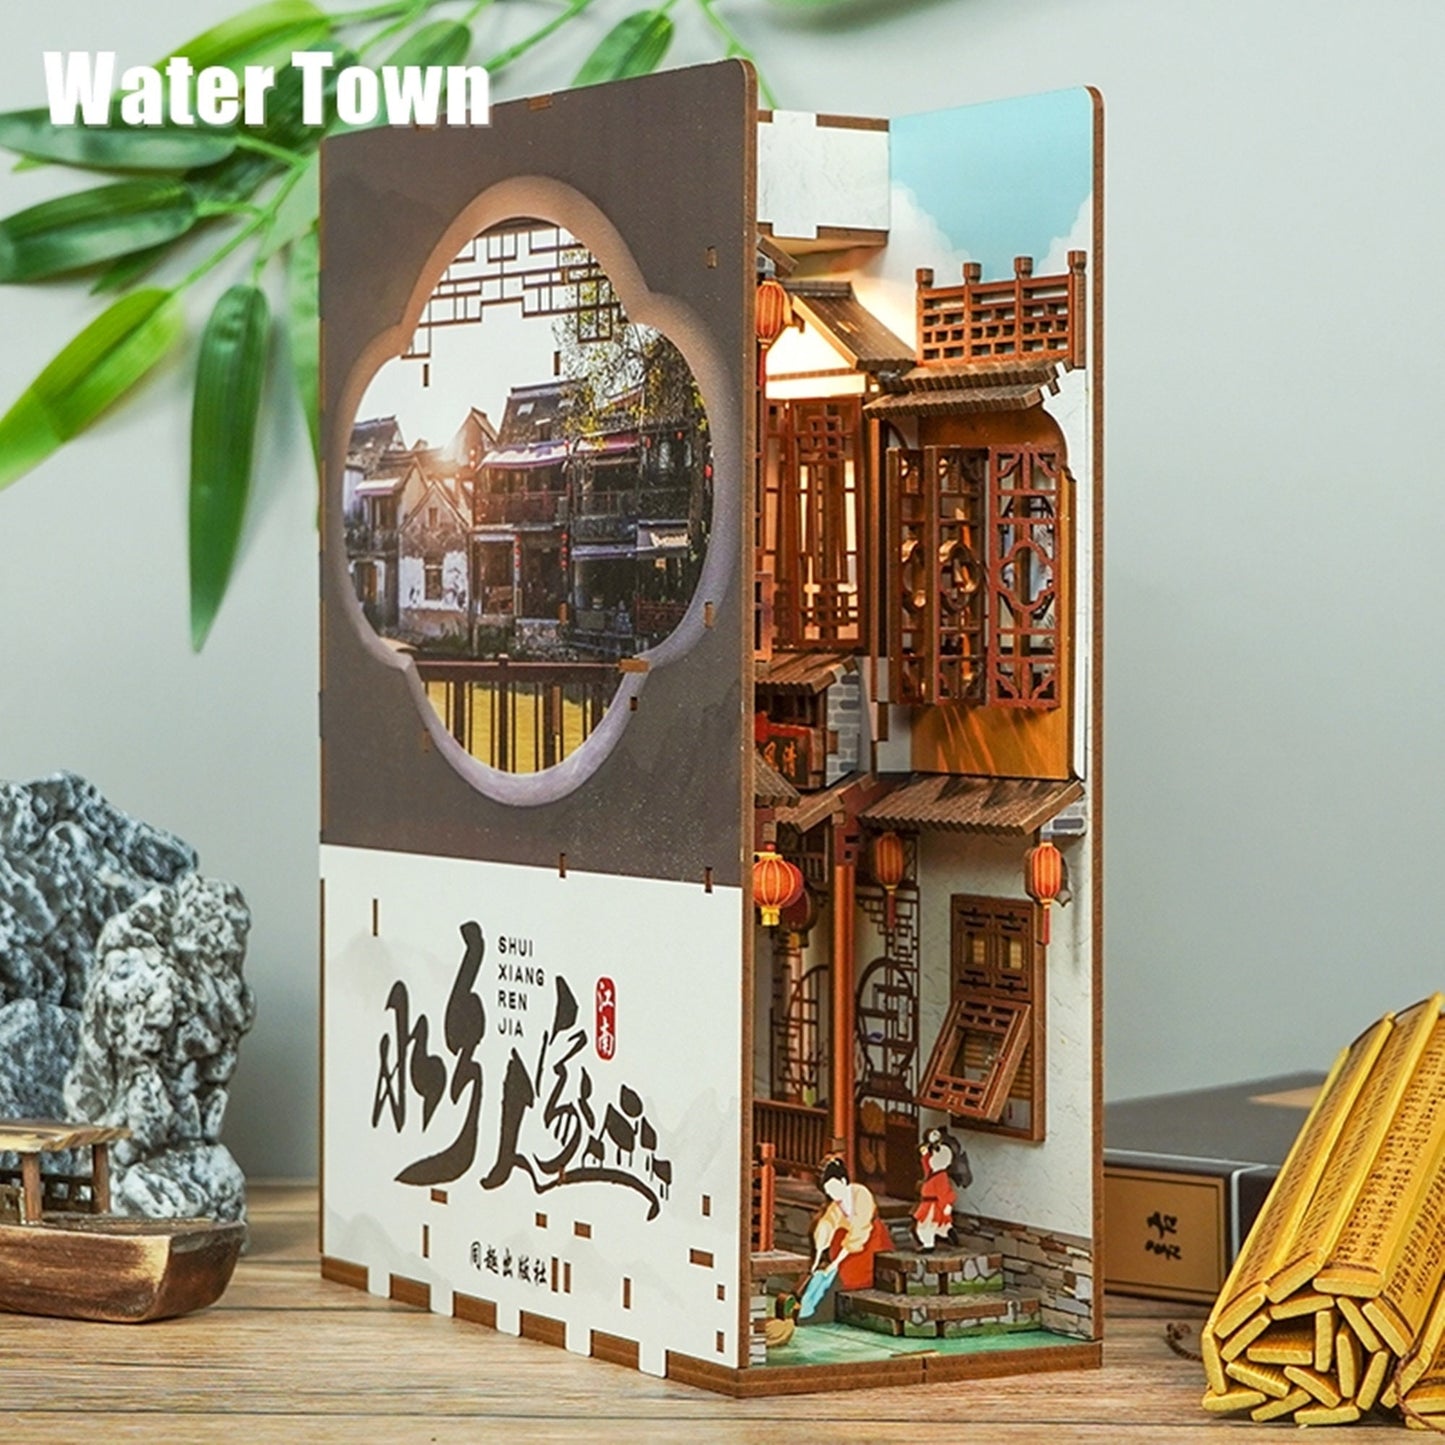 Water Town DIY Book Nook Kit Bookshelf Decorations